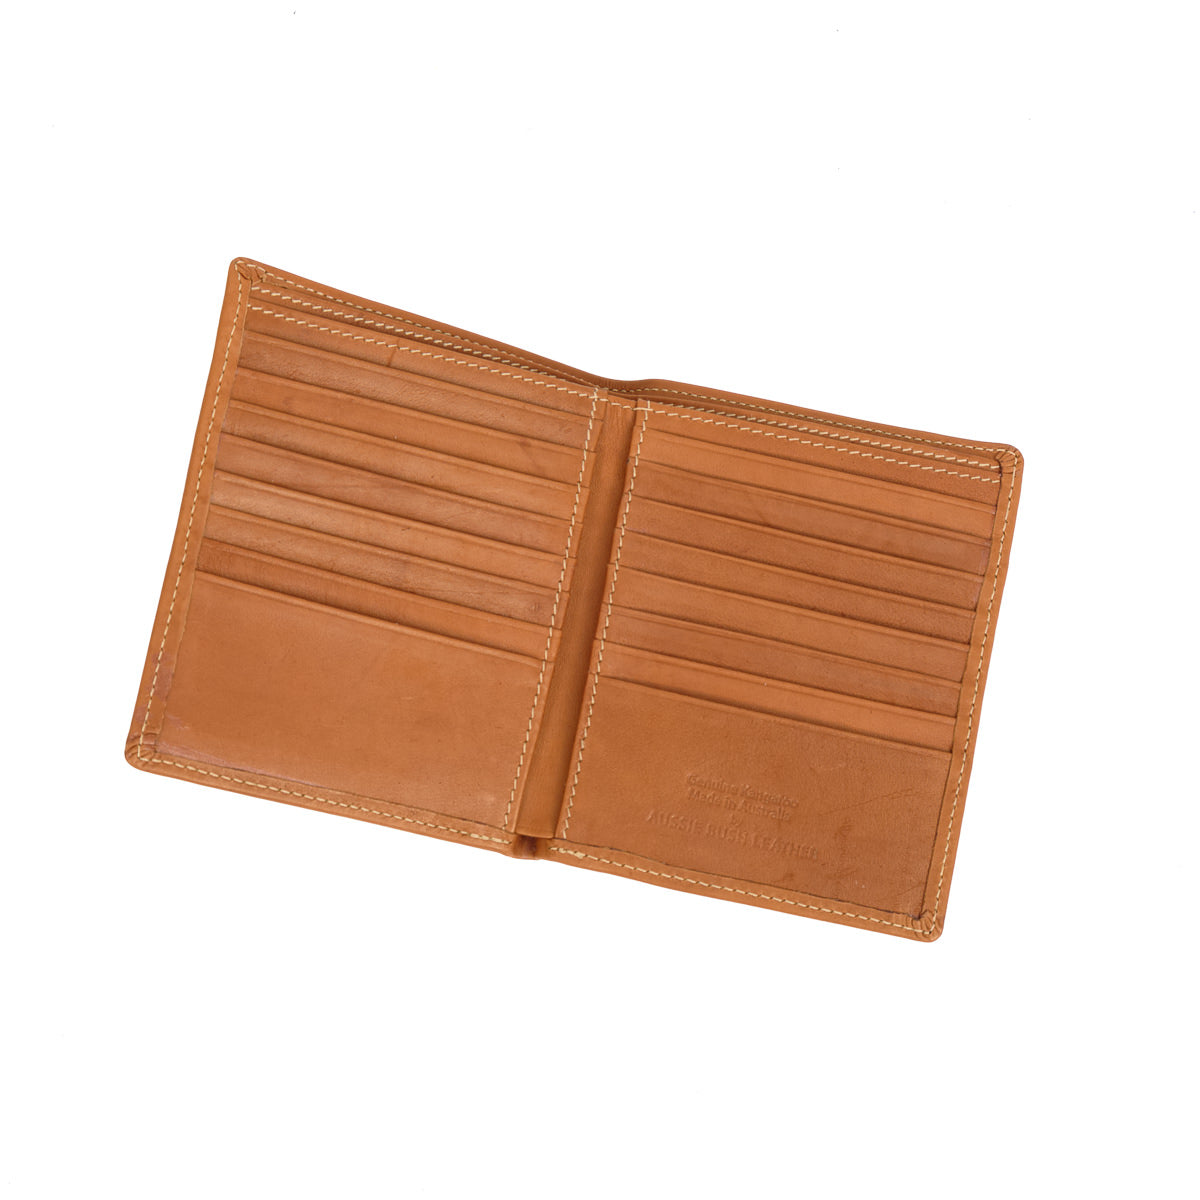 Credit Card Wallet - Kangaroo - Aussie Bush Leather